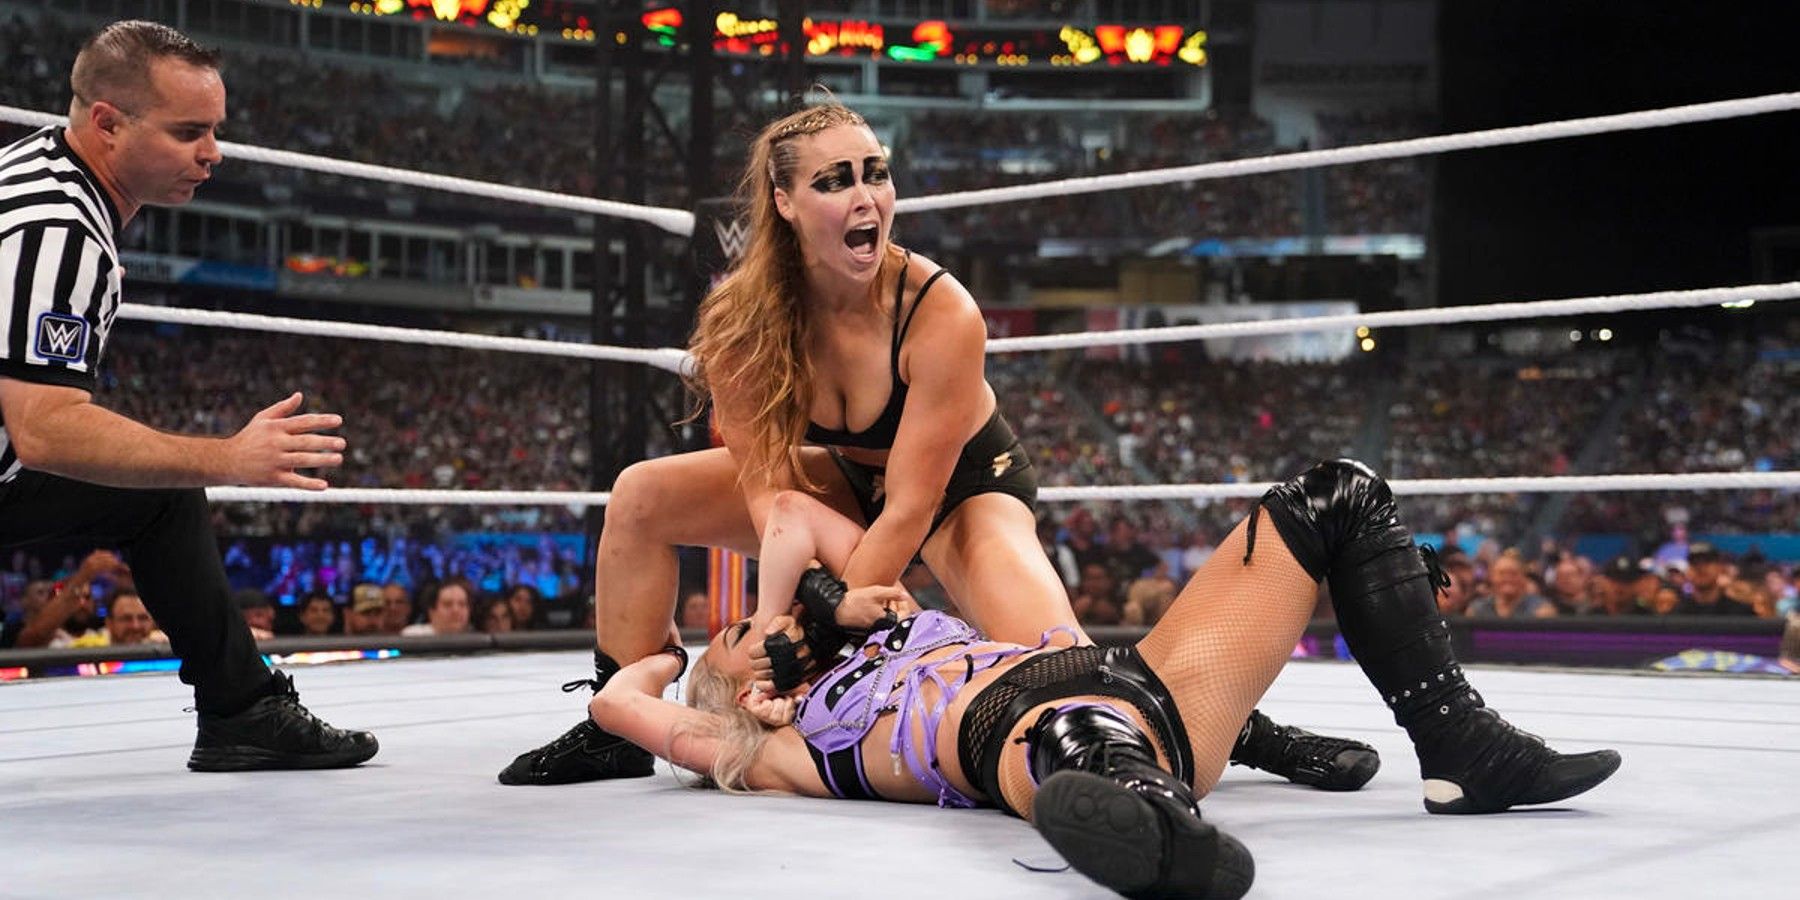 Ronda Rousey and Liv Morgan SmackDown Women's Championship match at SummerSlam 2022